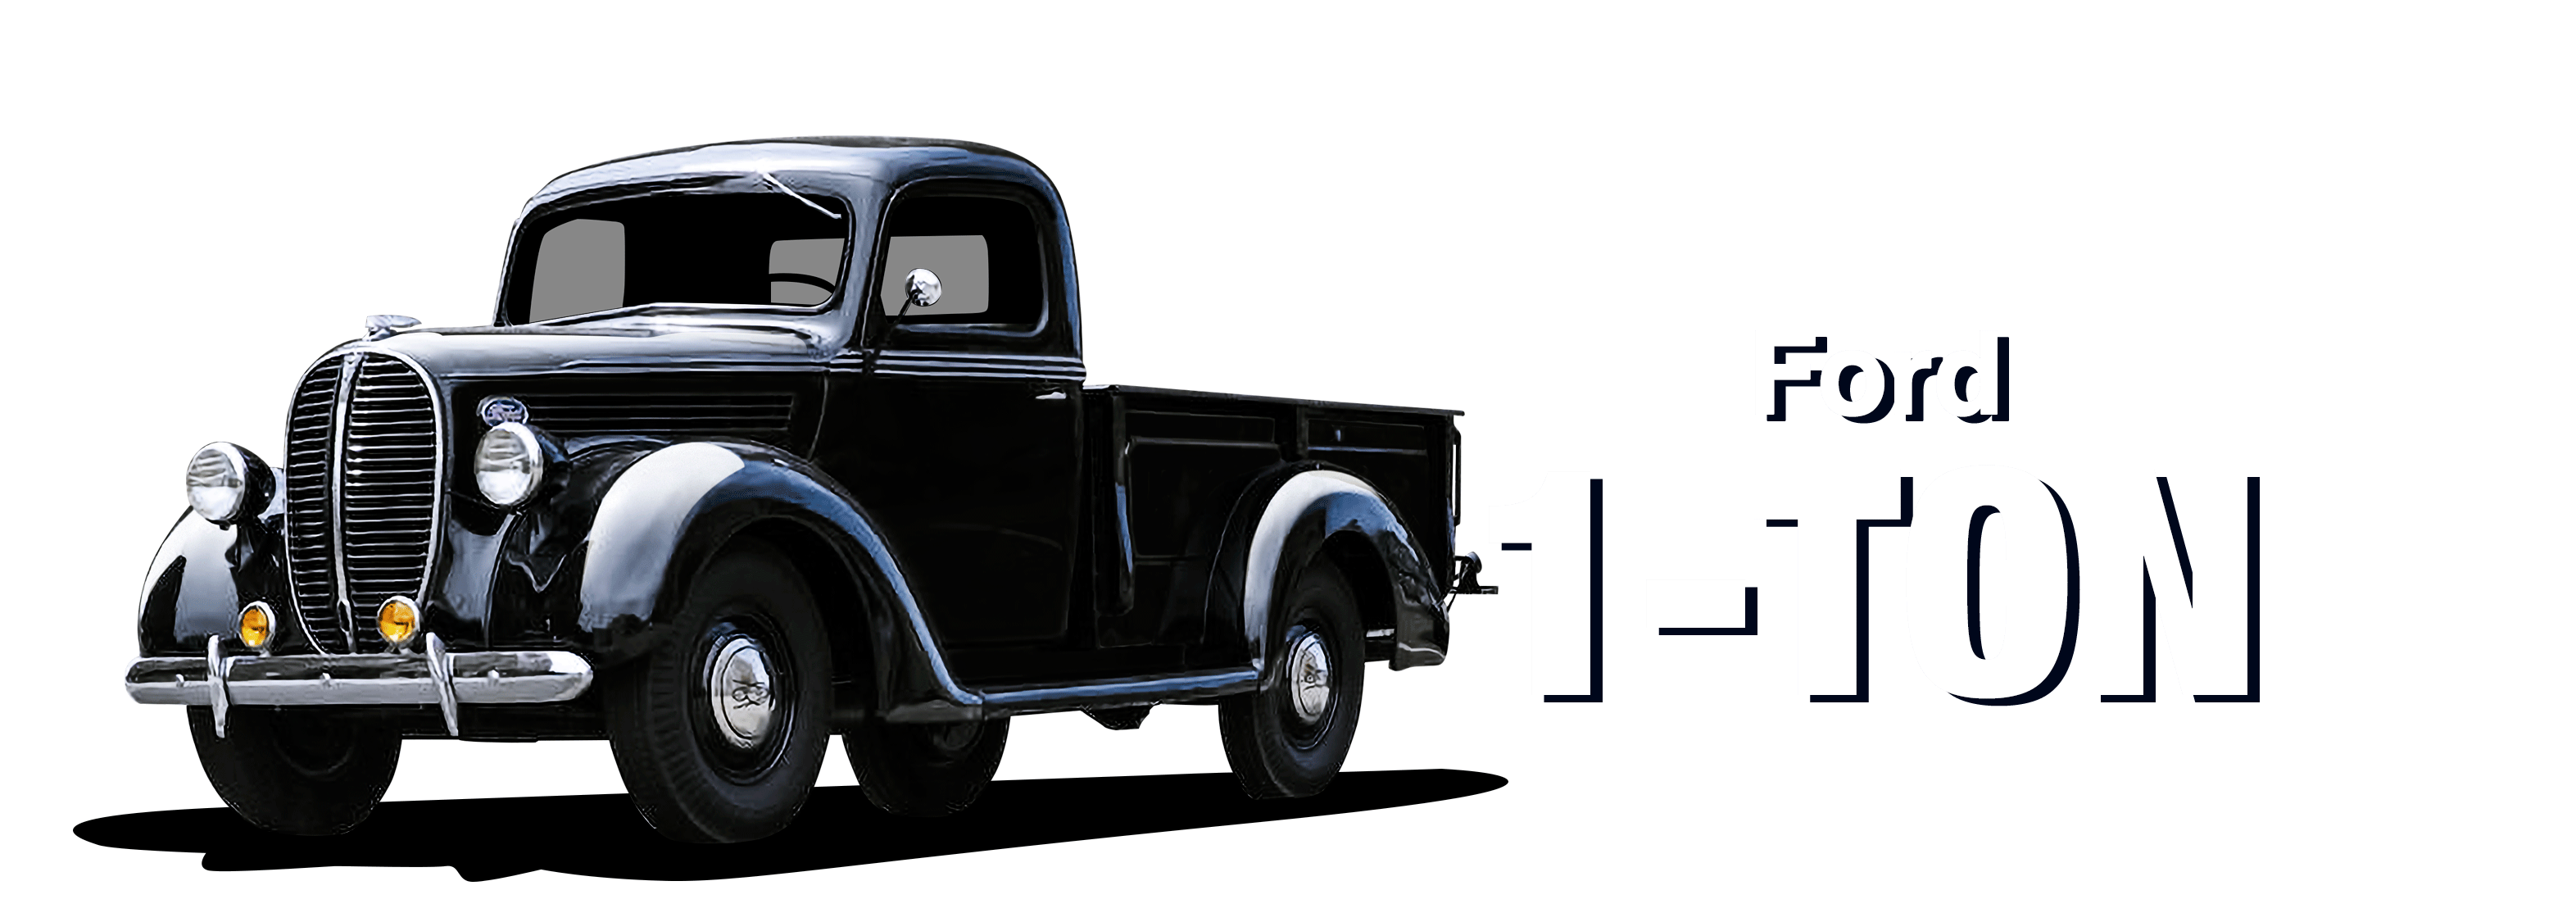 Ford-1_TonPickup-vehicle-desktop-1